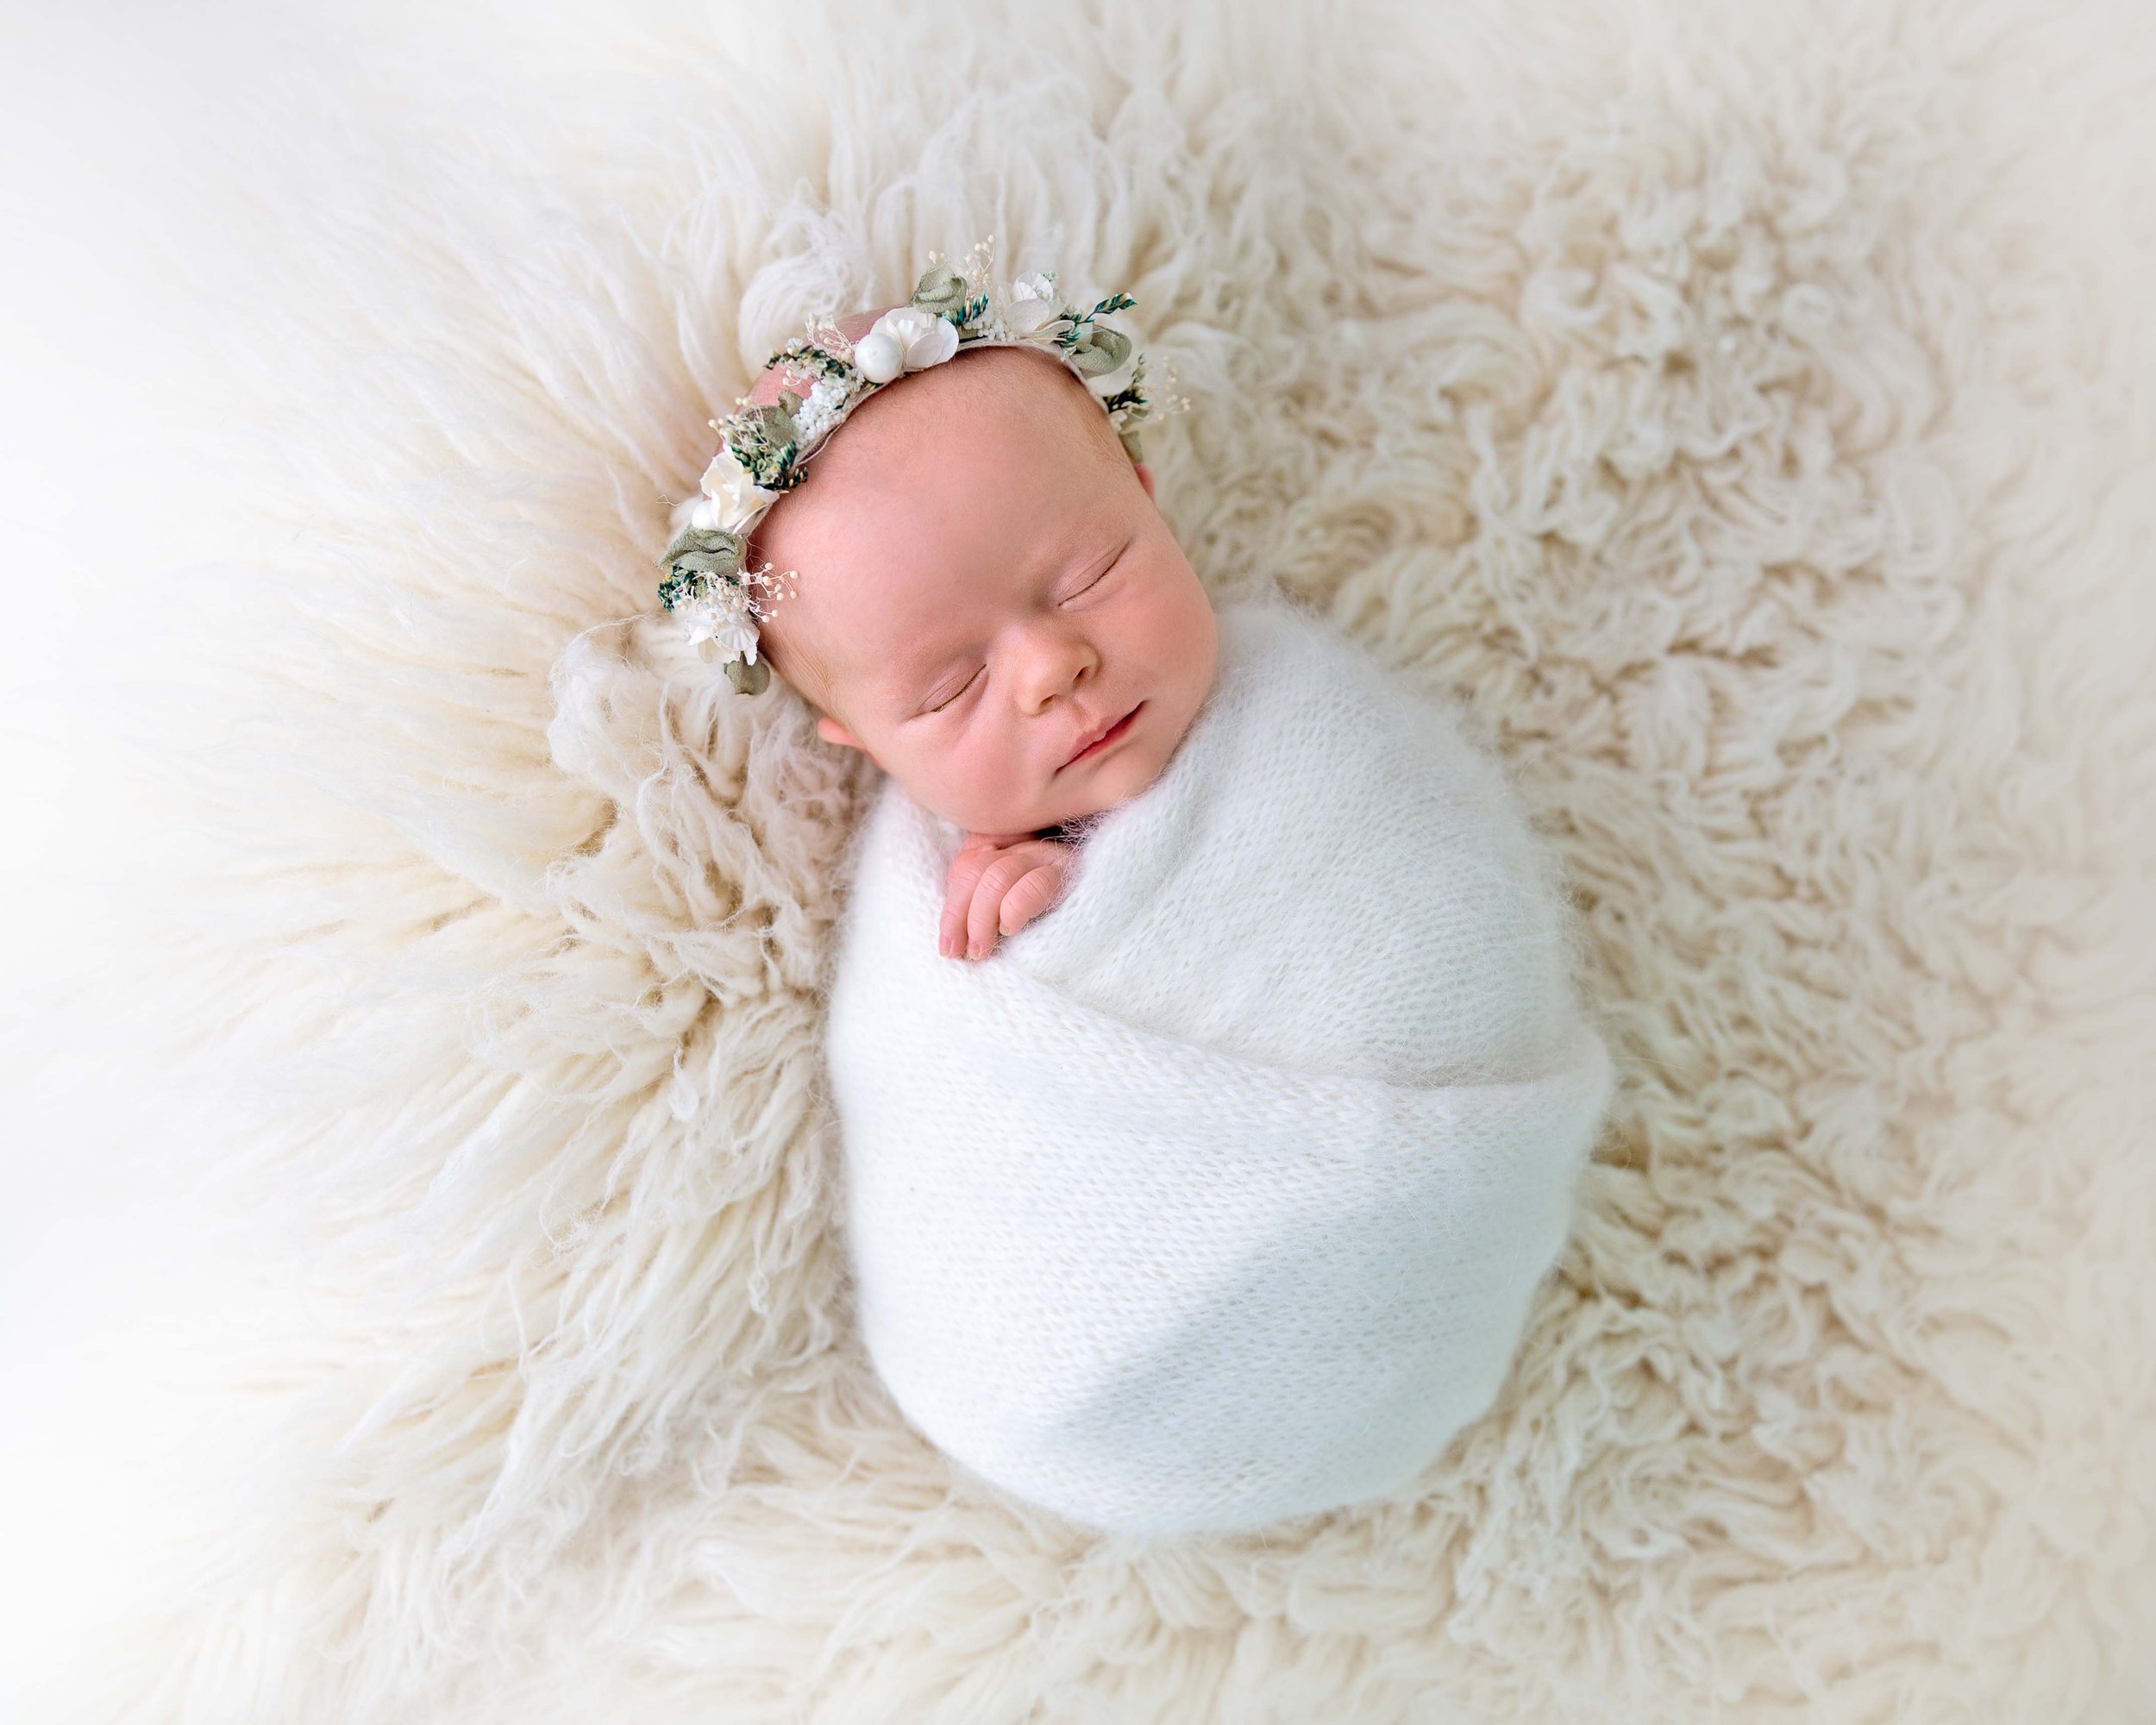 Baby-girl-photos-infant-images-Newborn-Photography-spokane-washinton-4.jpg